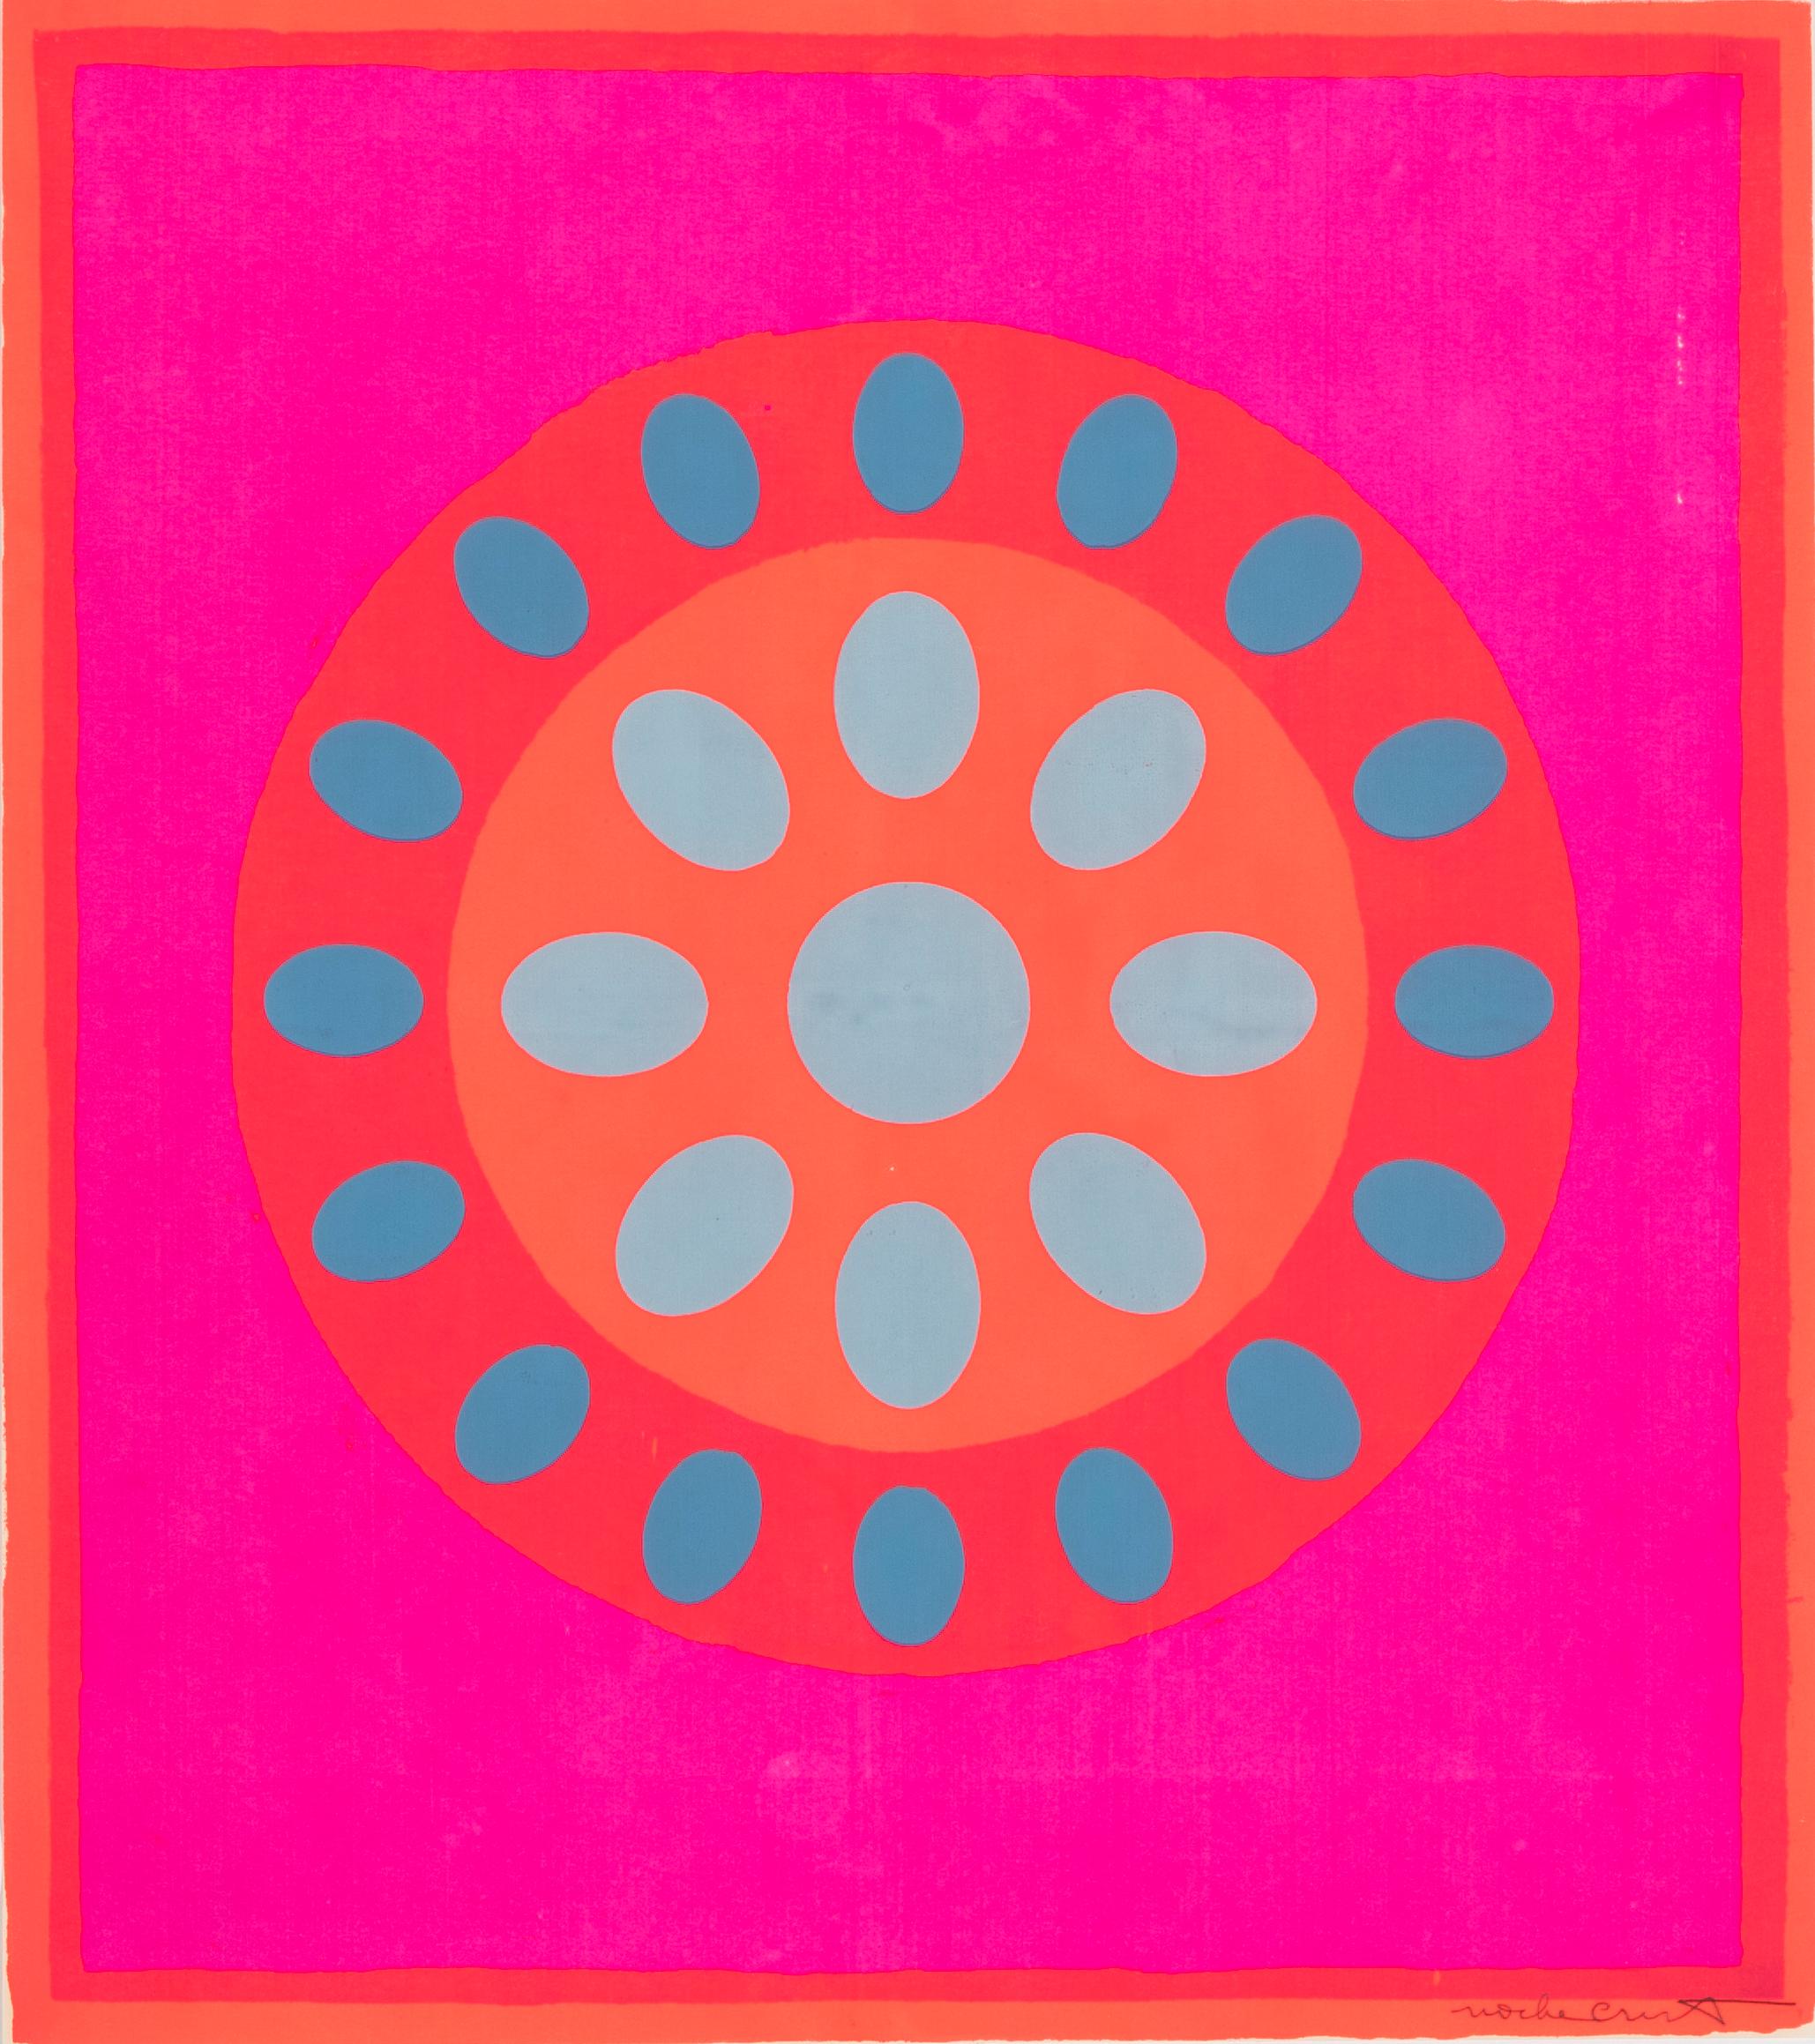 Pink Pop Art "In the Sun", 1960s